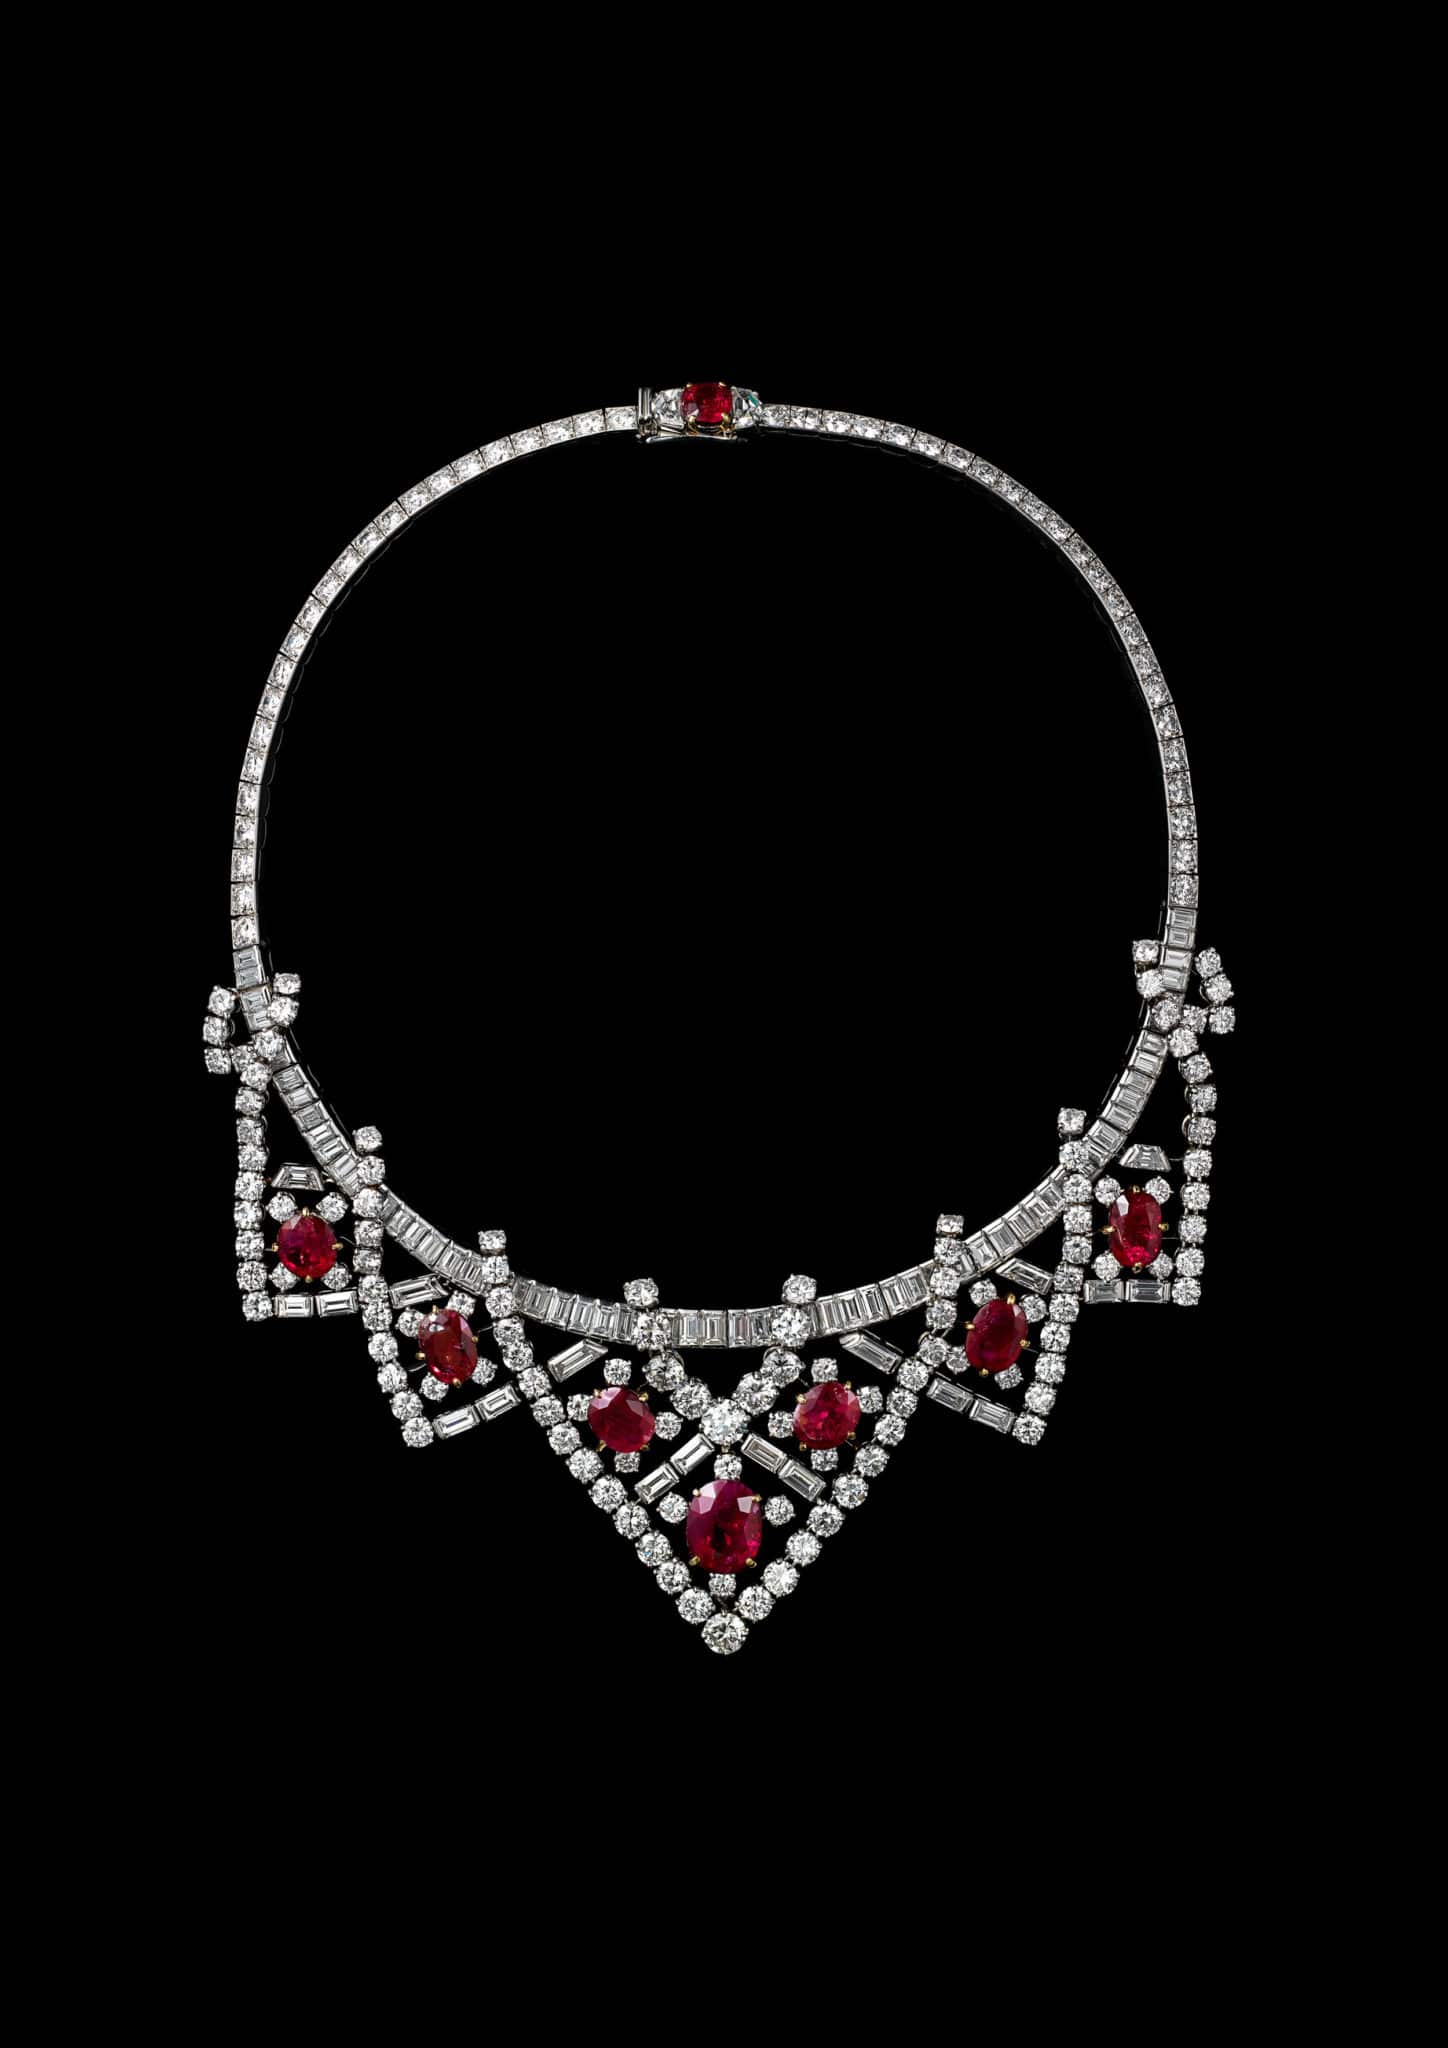 parure collier en diamants de la marque Cartier en rubis pour Elisabeth Taylor